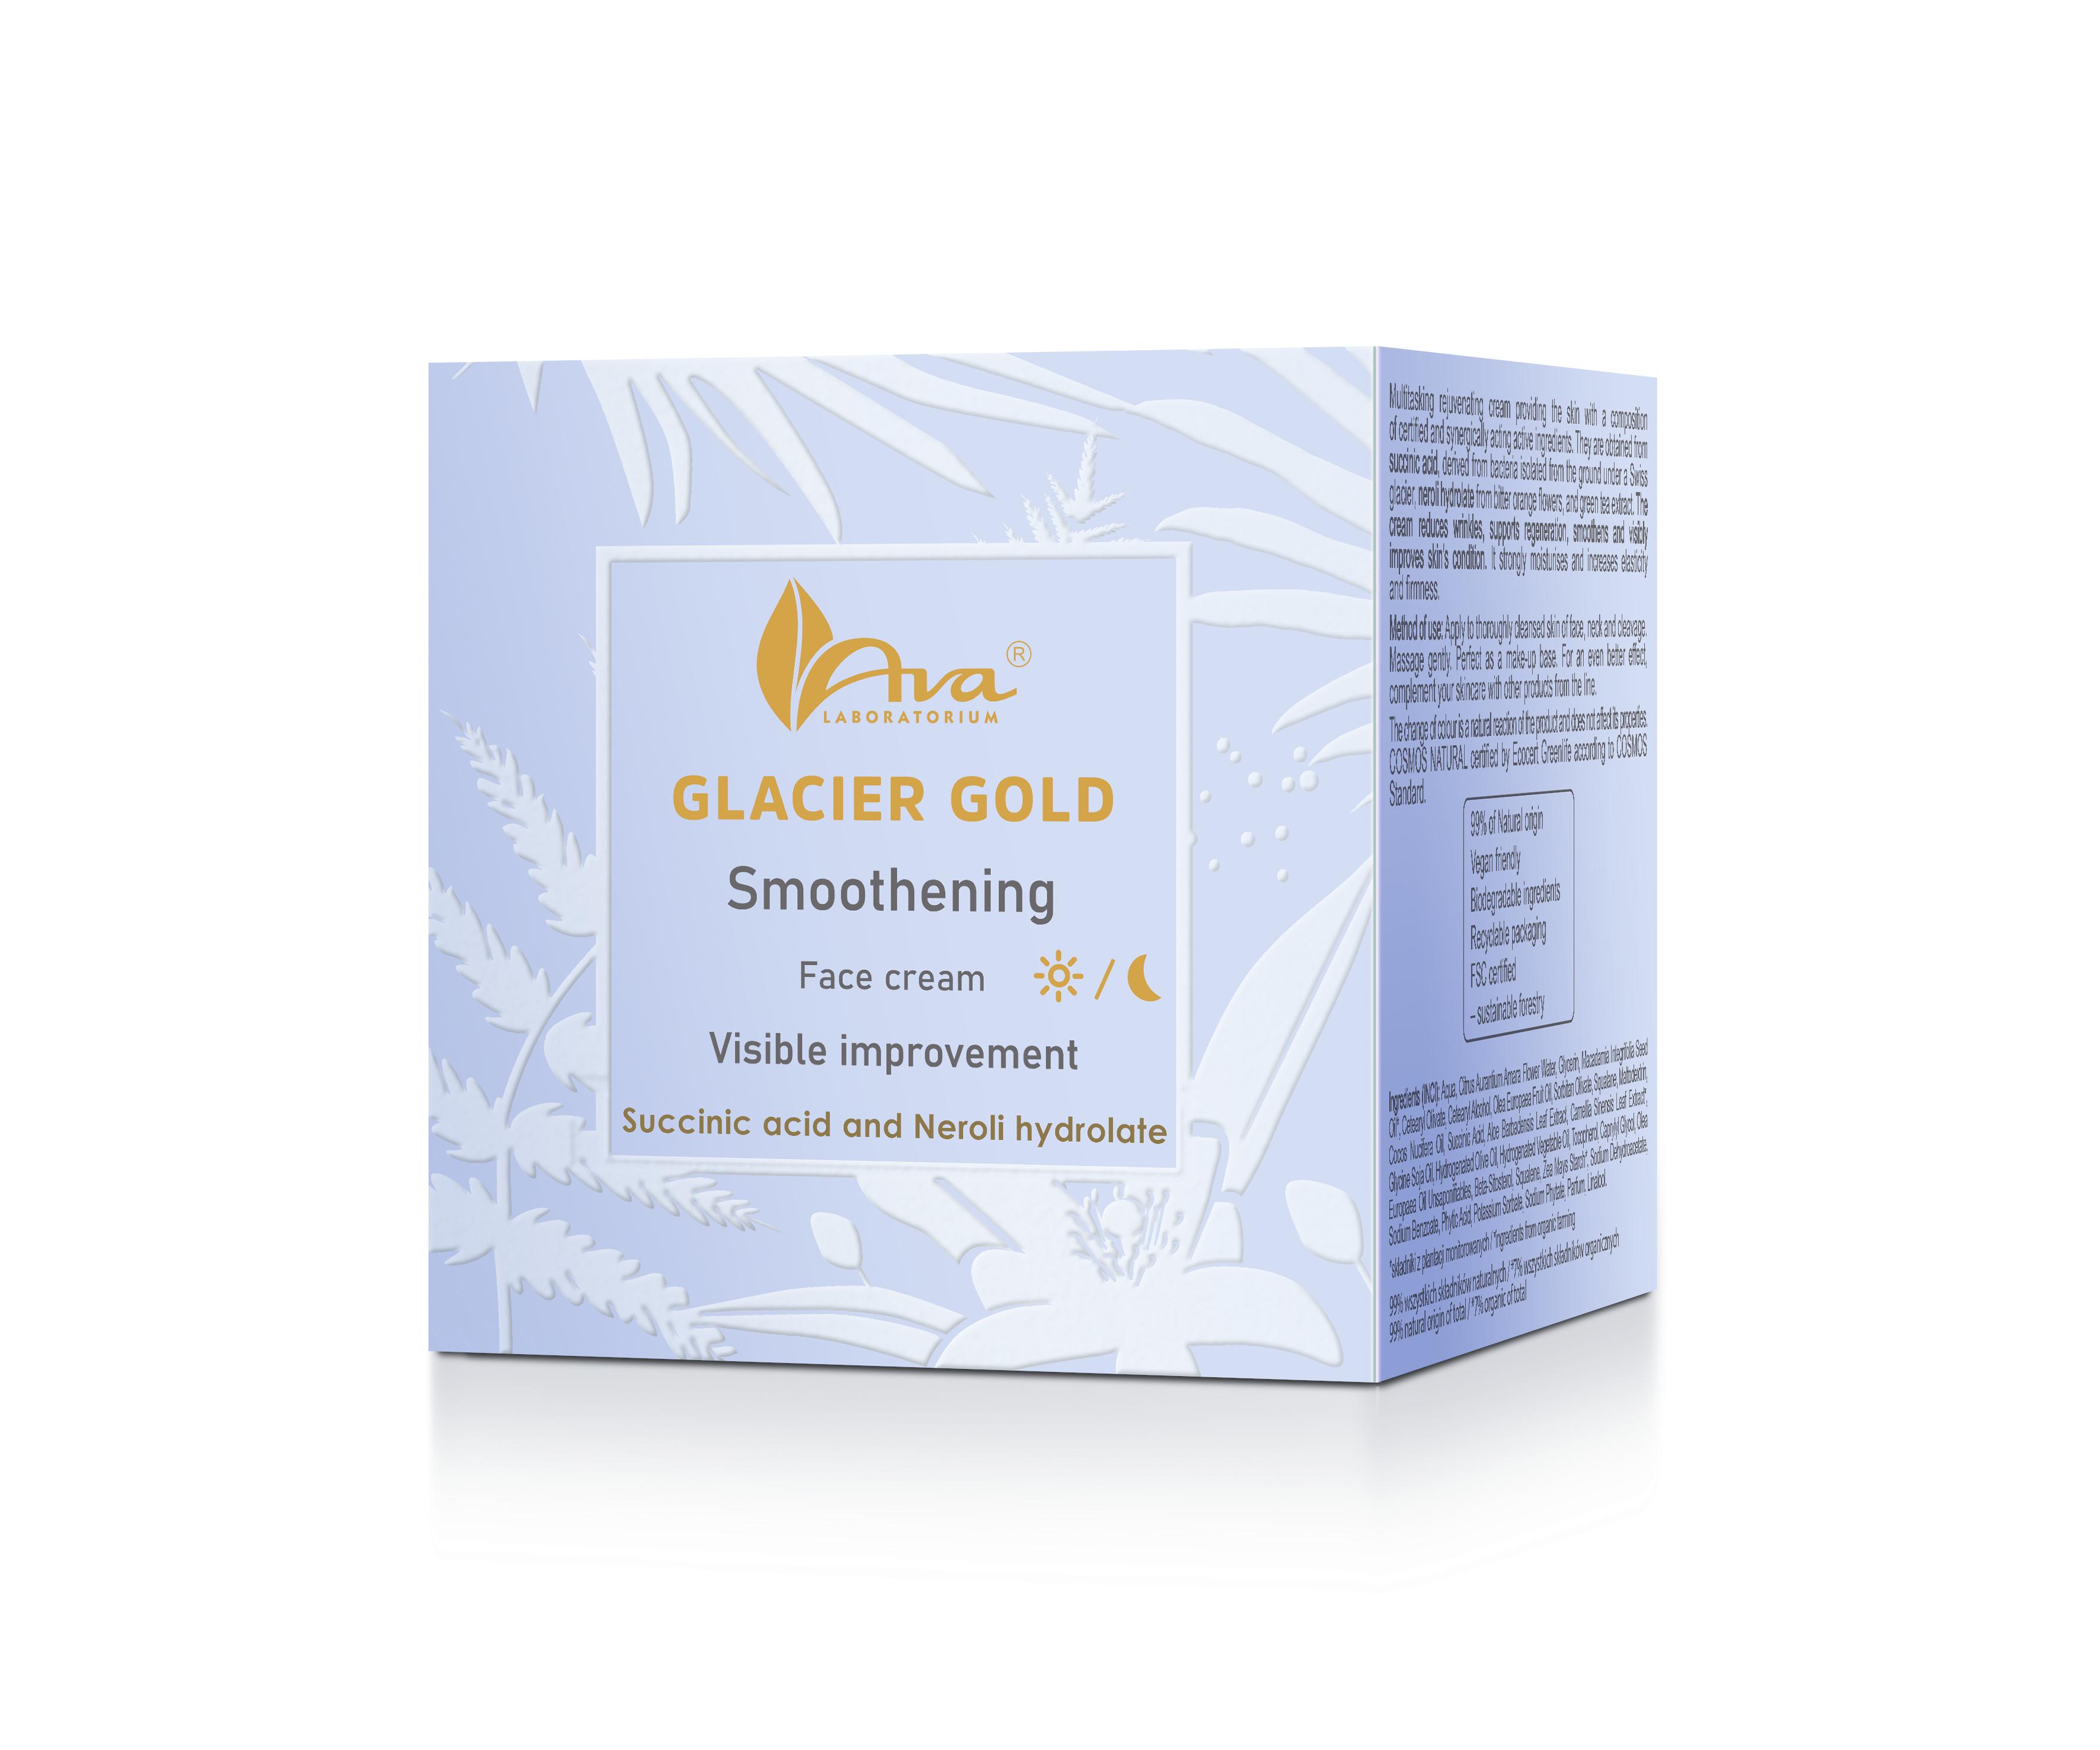 Glacier Gold Smoothening BOX